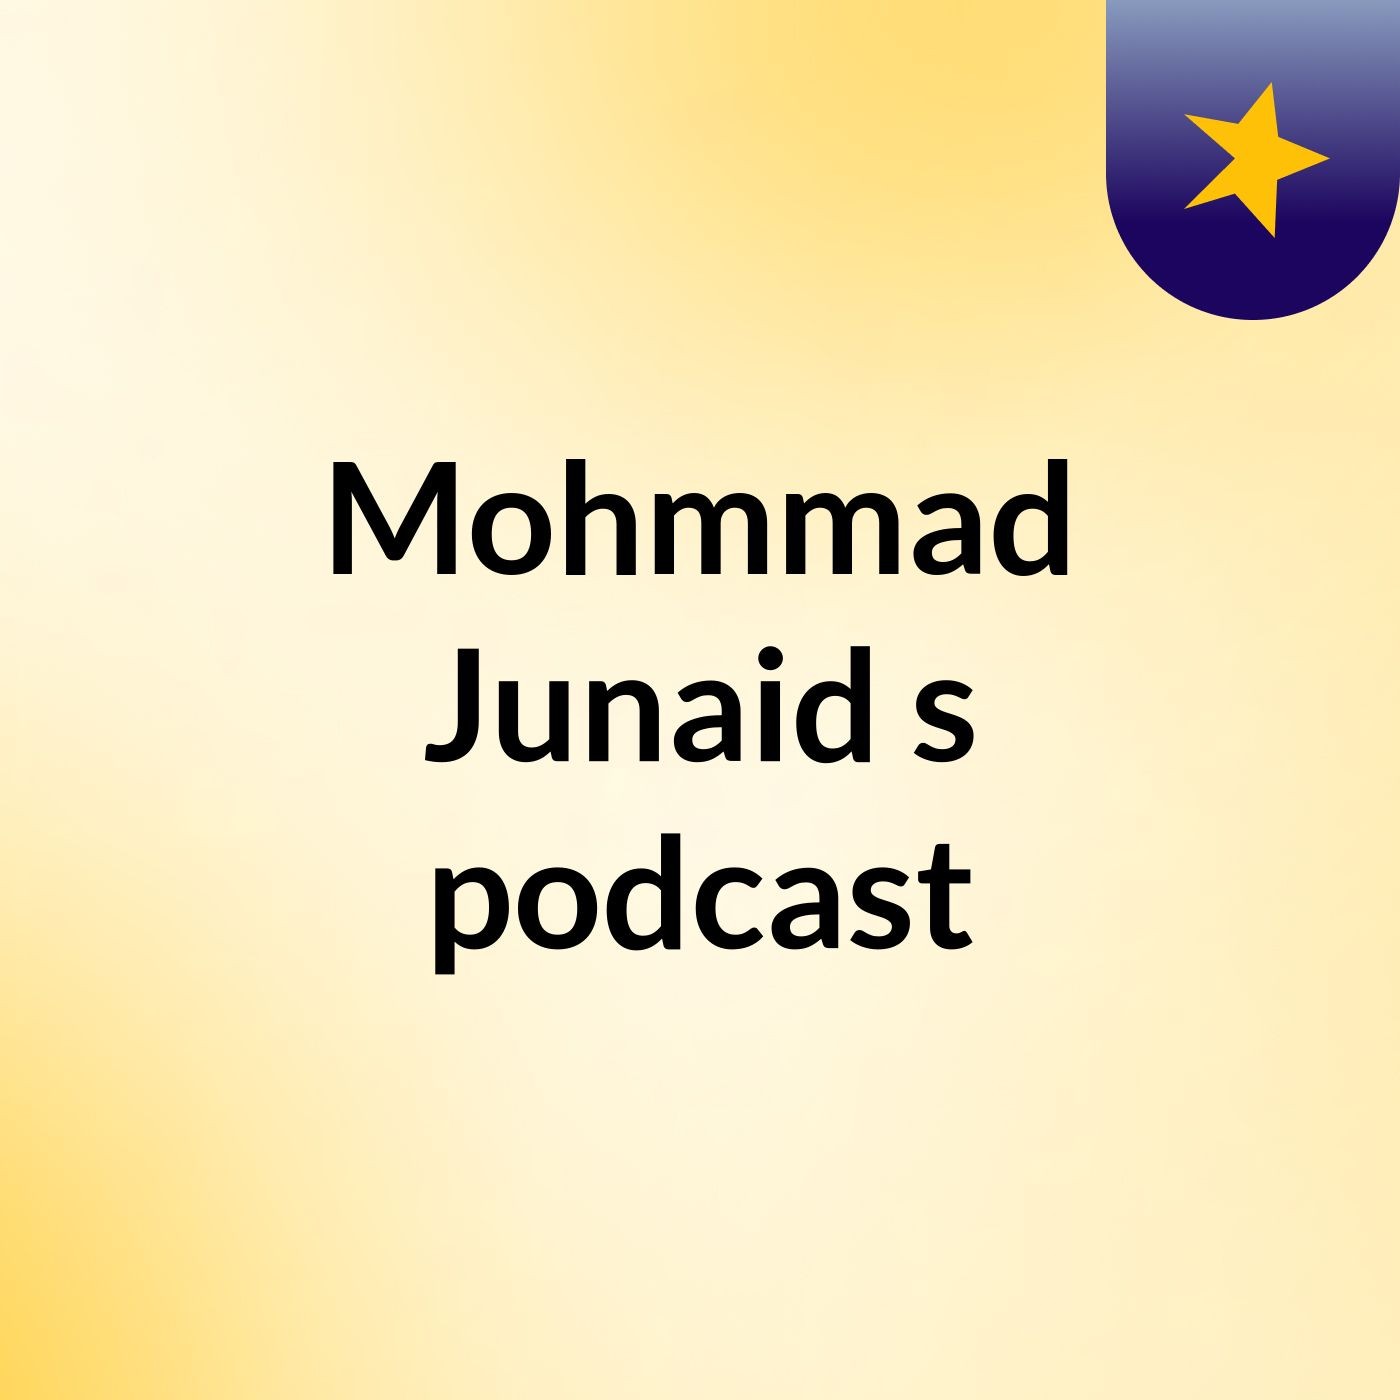 Episode 2 - Mohmmad Junaid's podcast